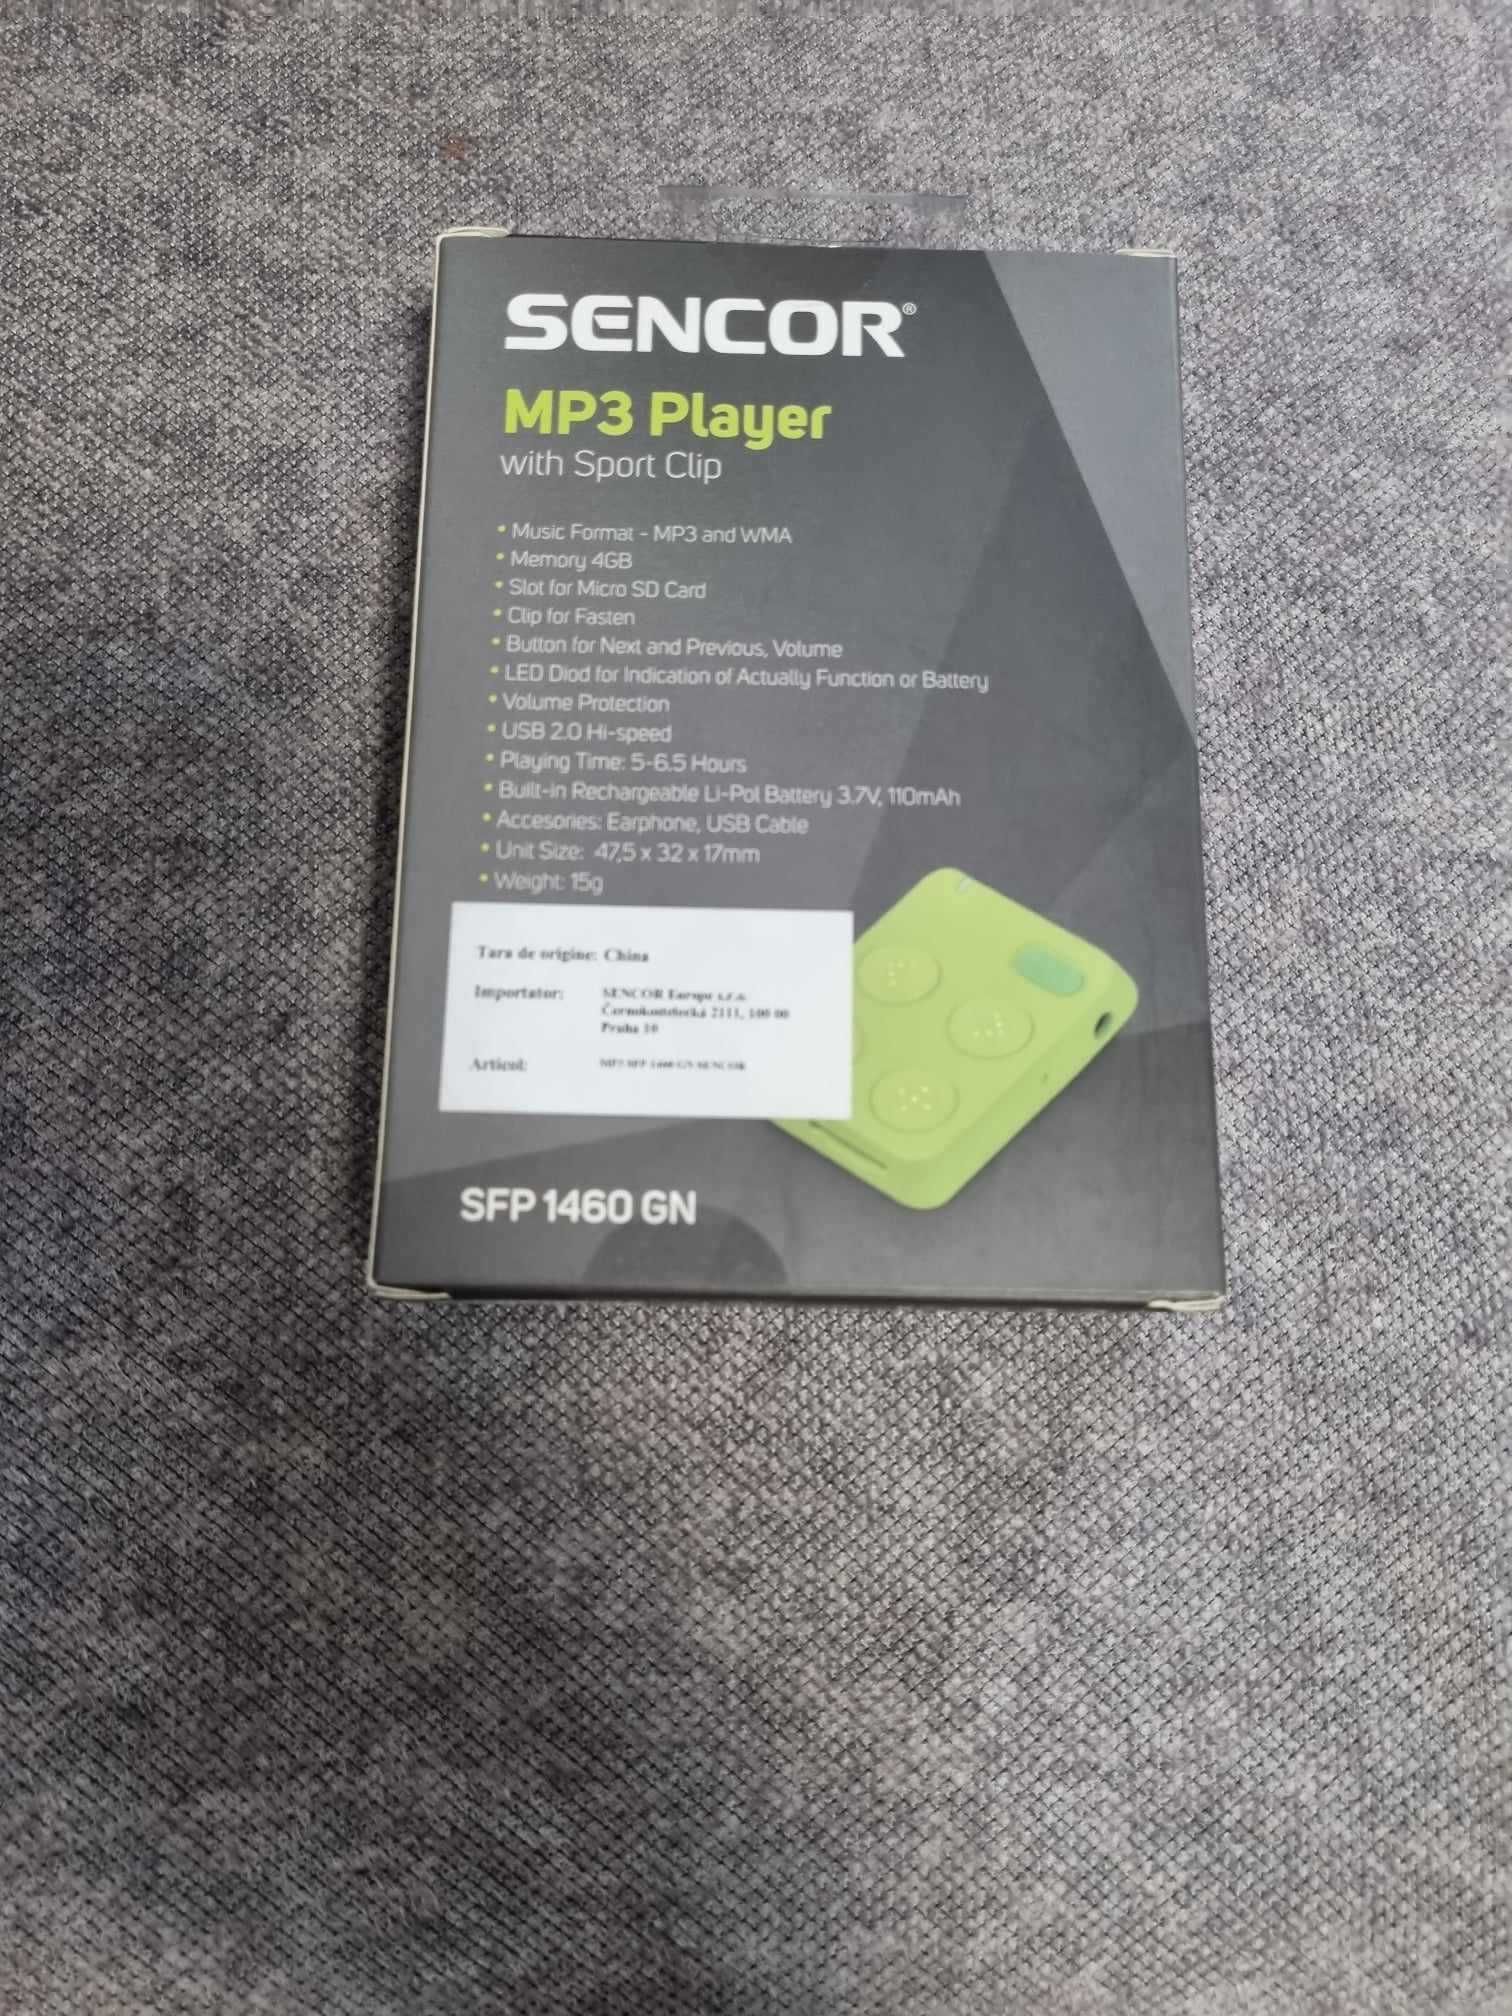 Sencor mp3 player model SFP 1460 GN sigilat.